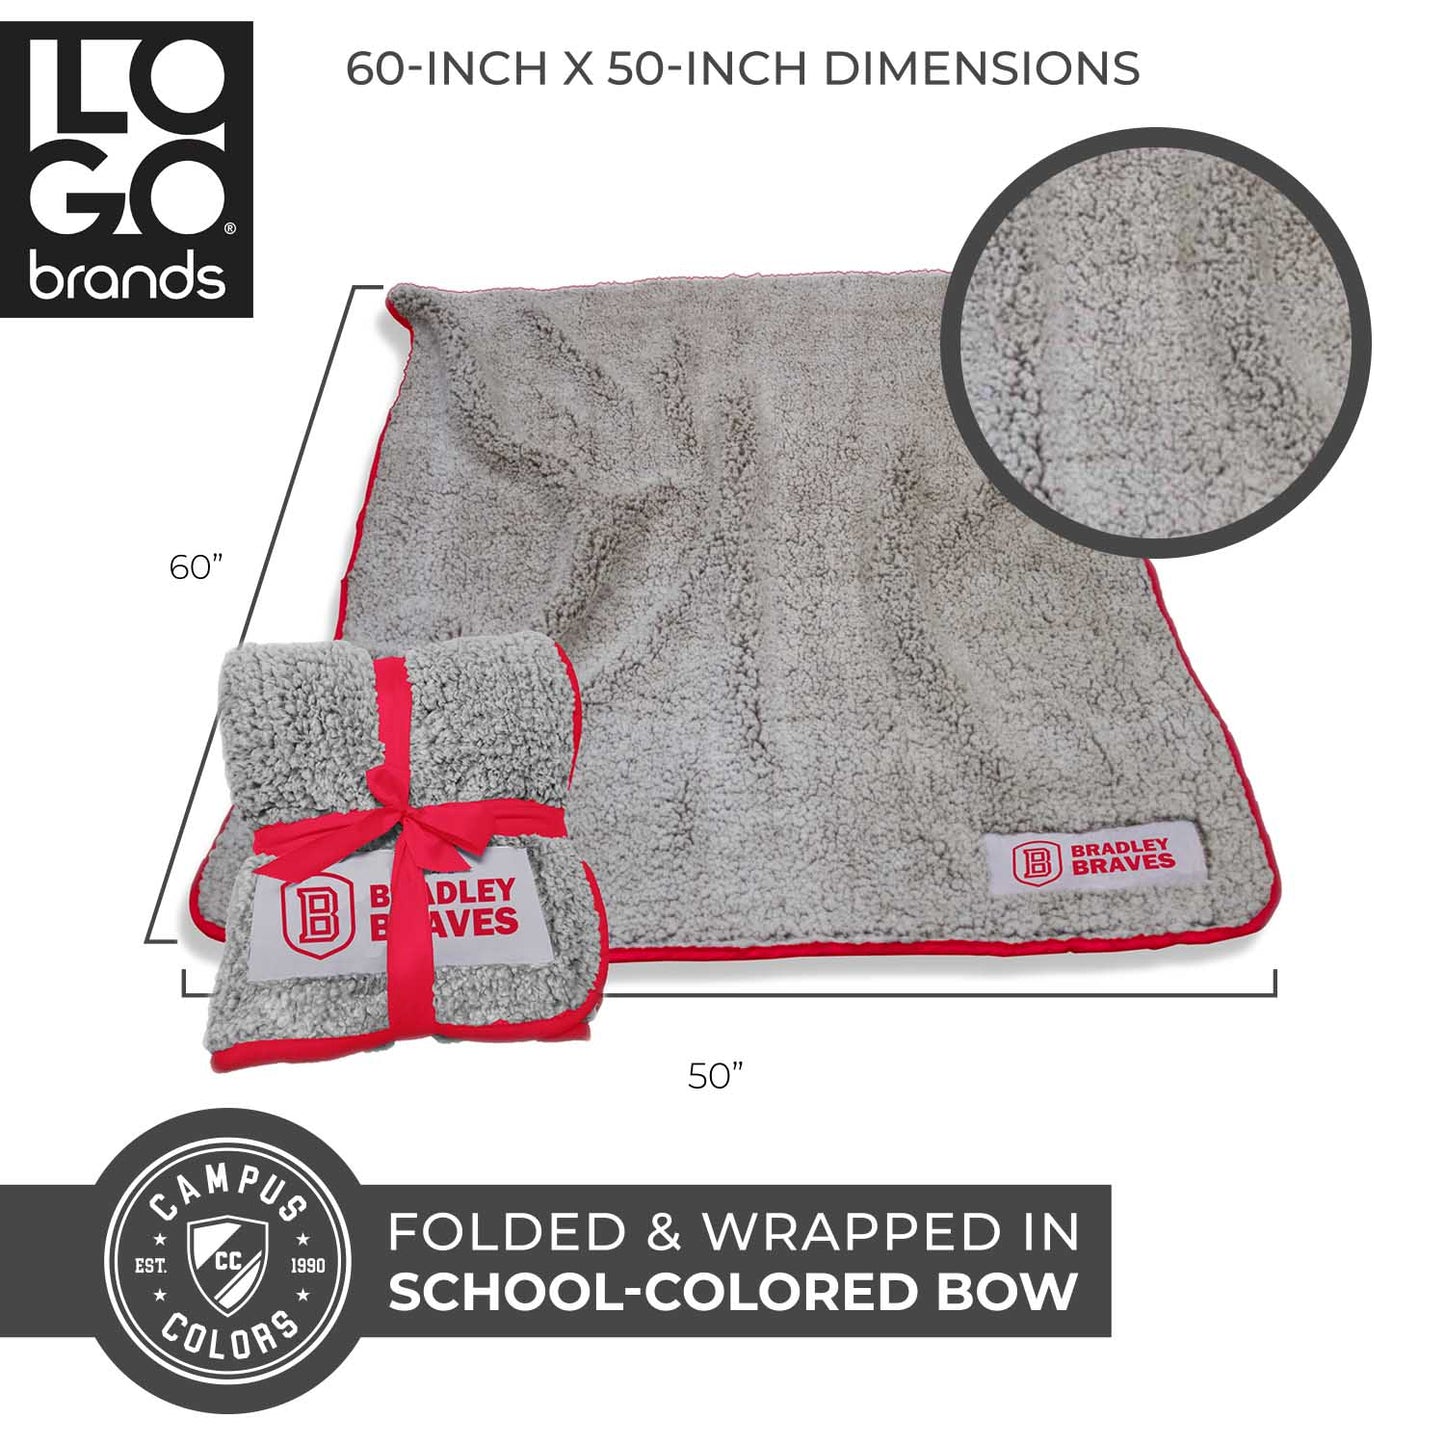 Bradley Braves Frosty Fleece 60 X 50 Blanket - Red